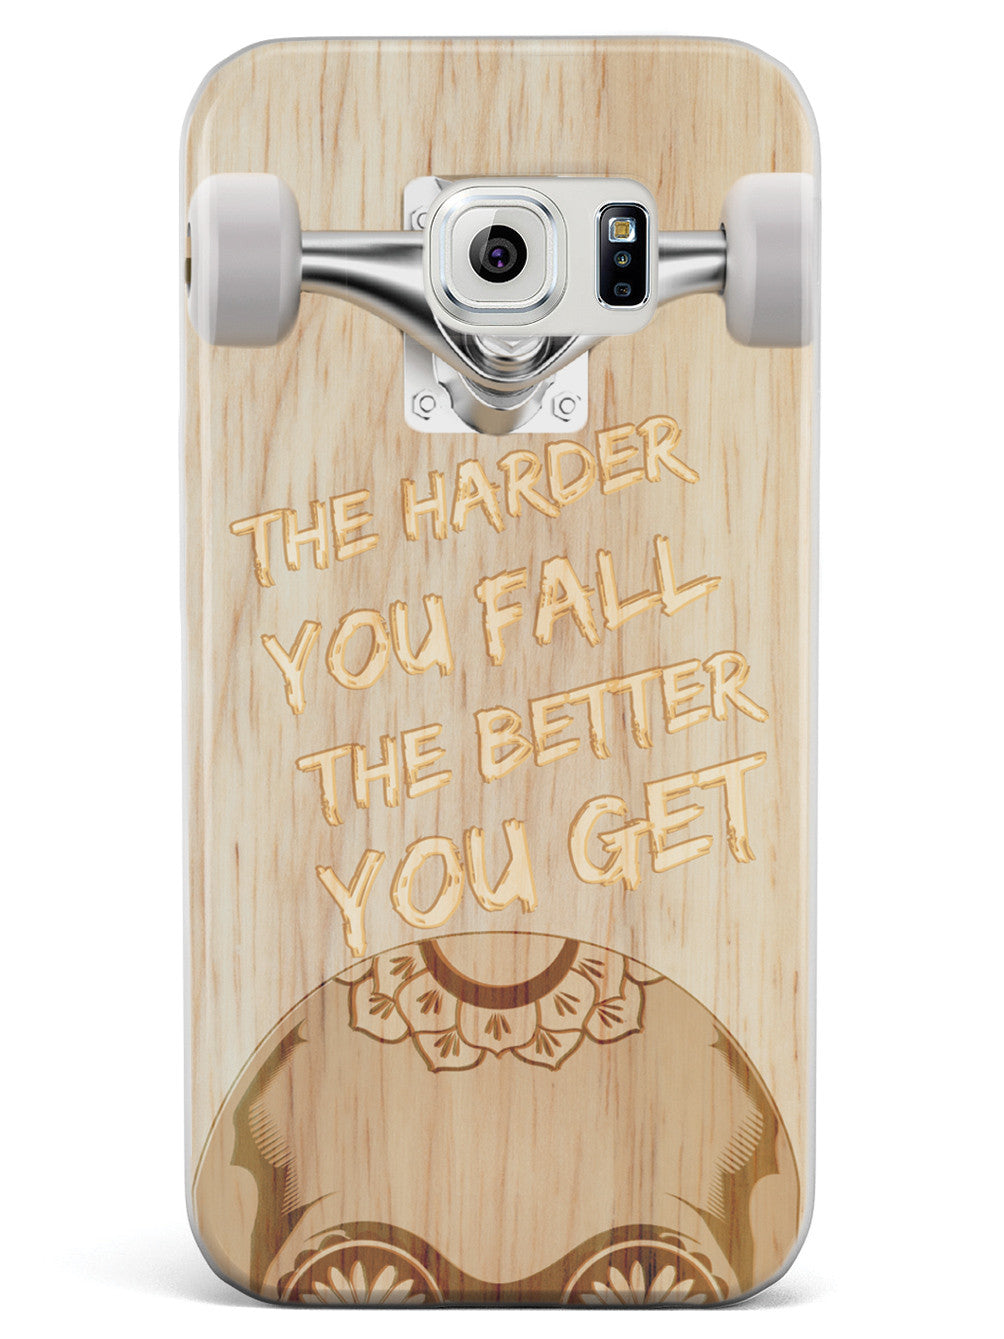 The Harder You Fall - Skateboarding Case